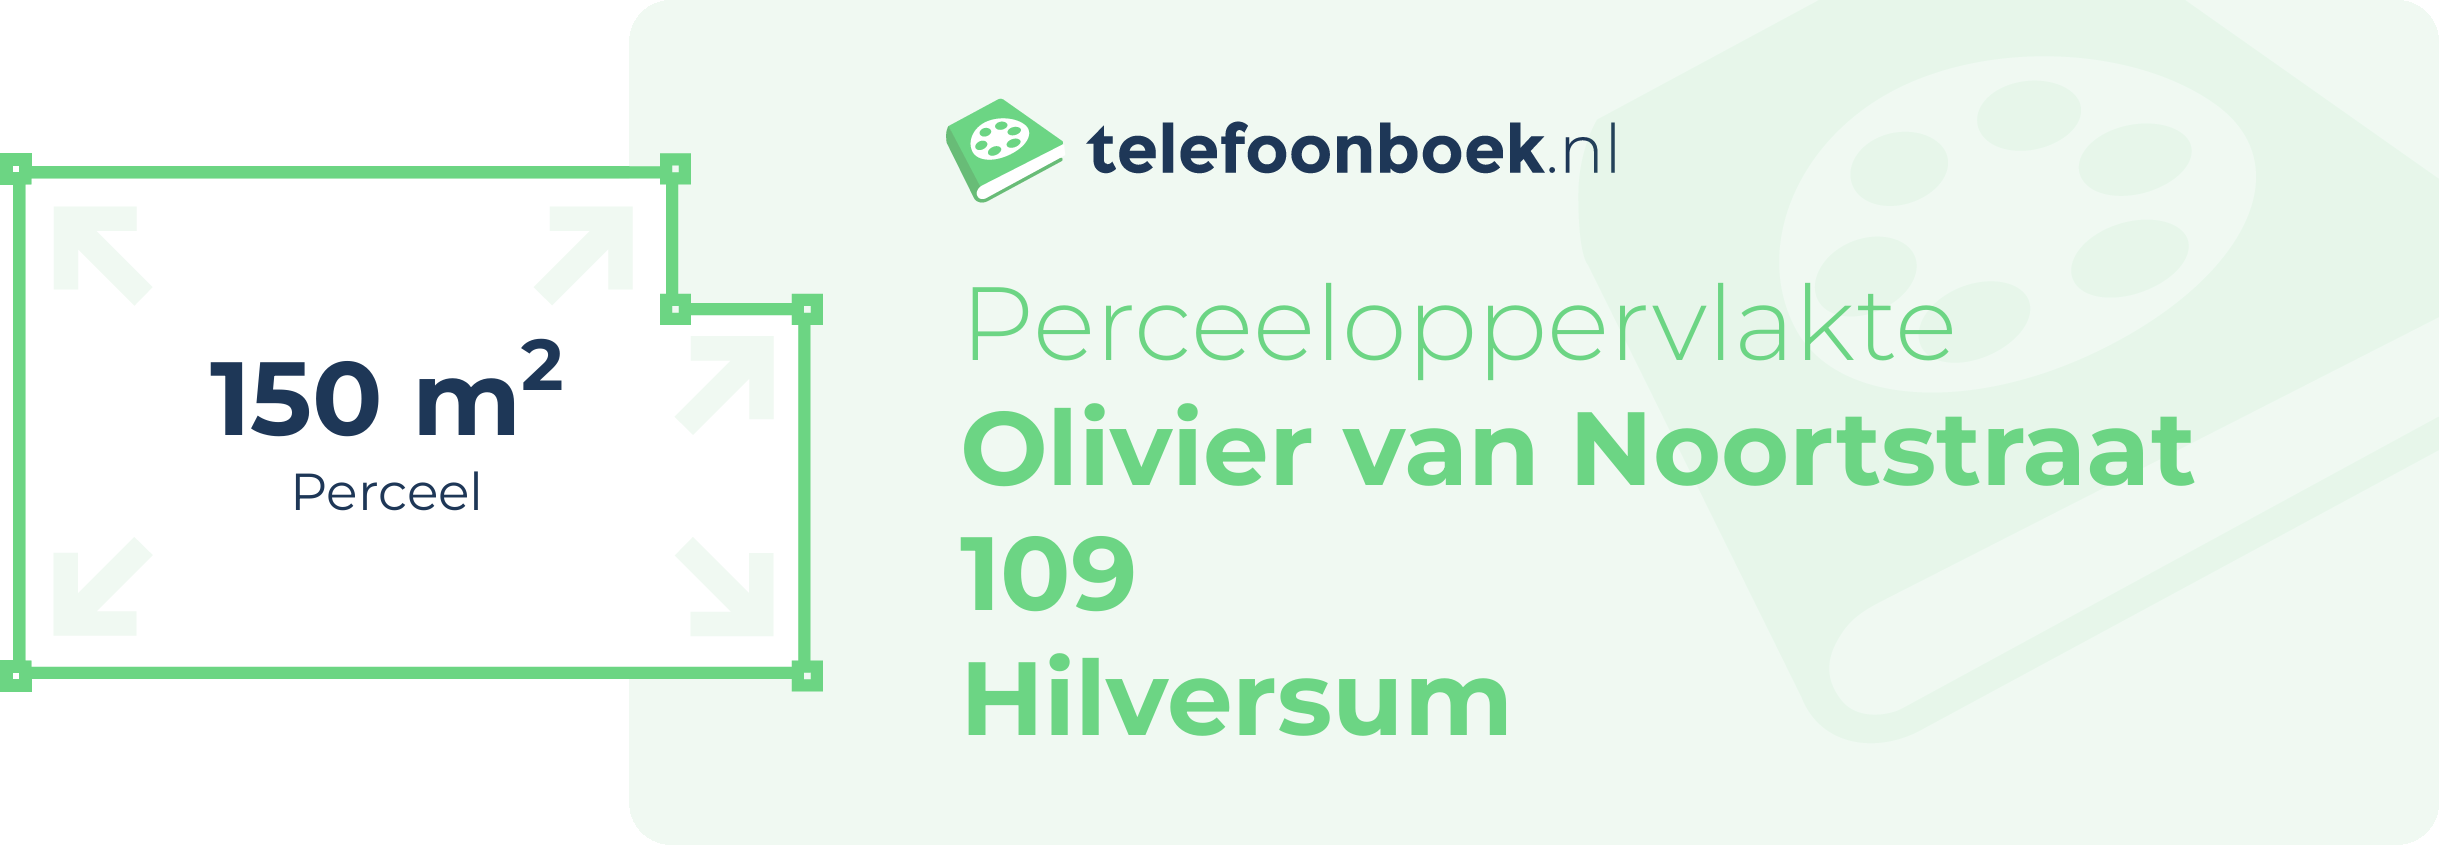 Perceeloppervlakte Olivier Van Noortstraat 109 Hilversum